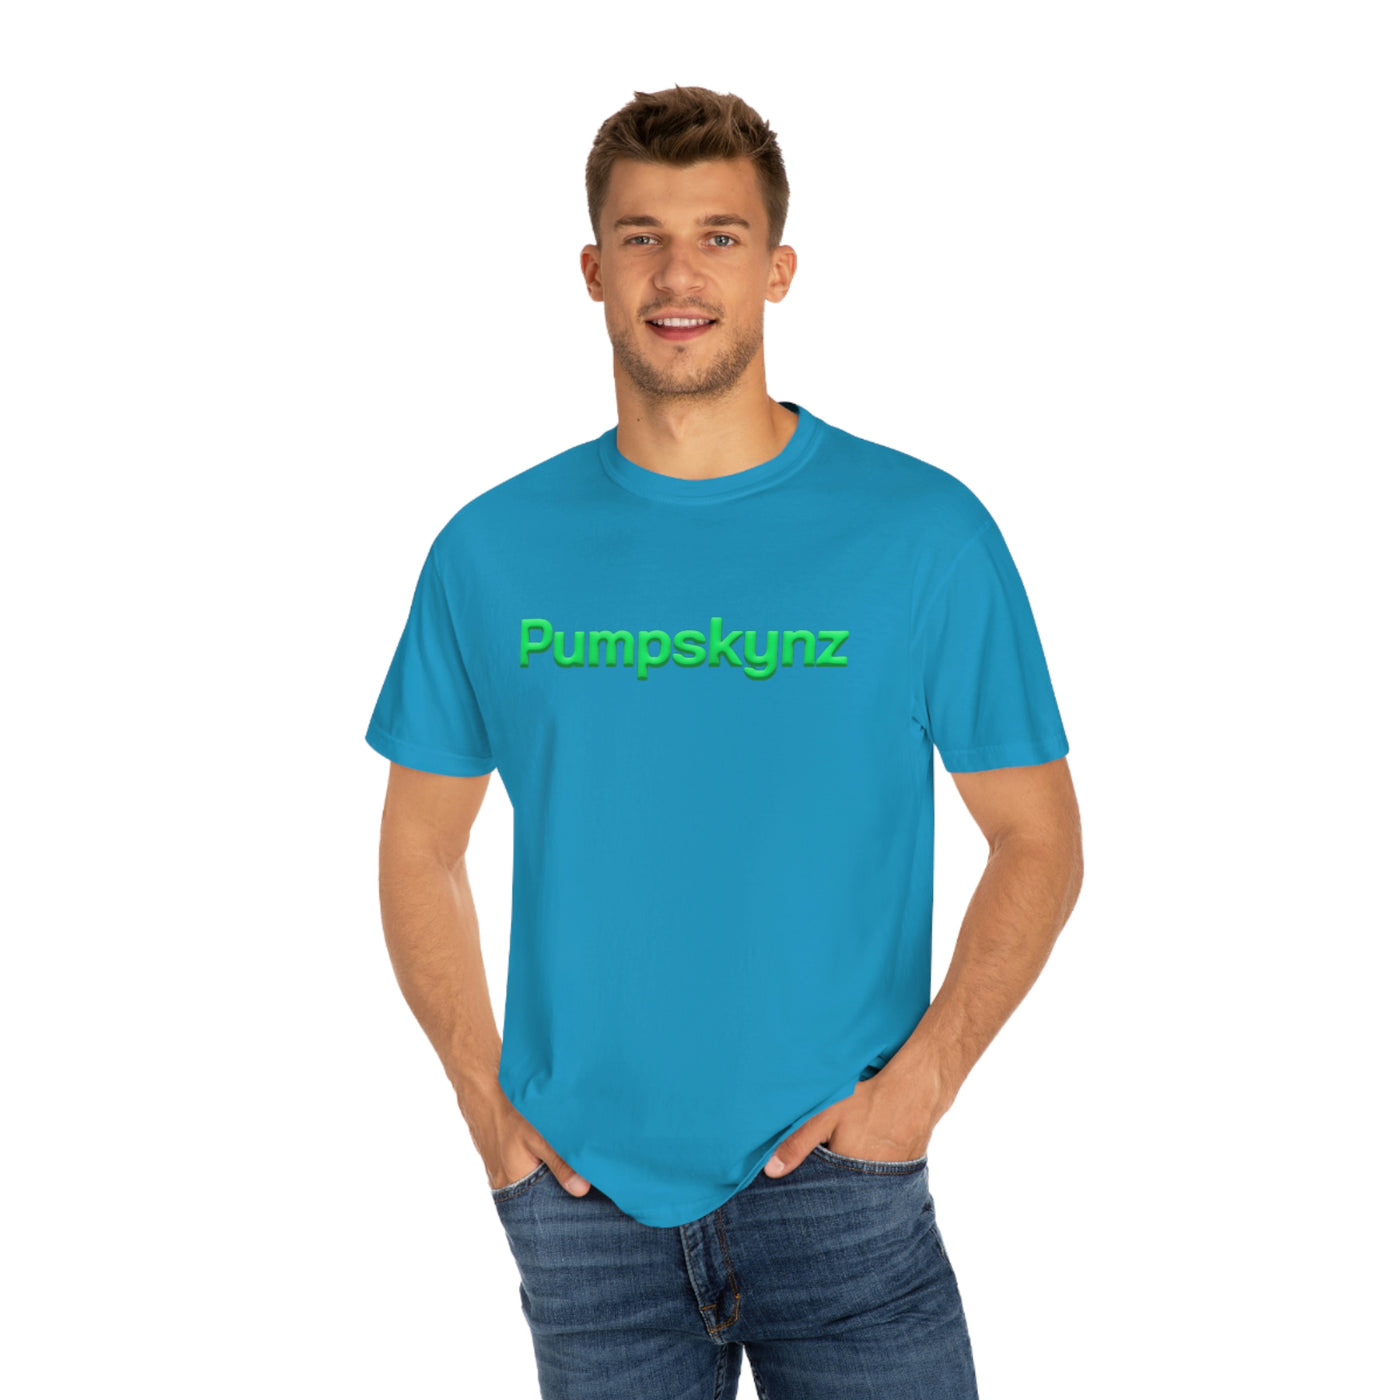 Pumpskynz Looking Good Today Sugar Unisex Garment-Dyed T-shirt